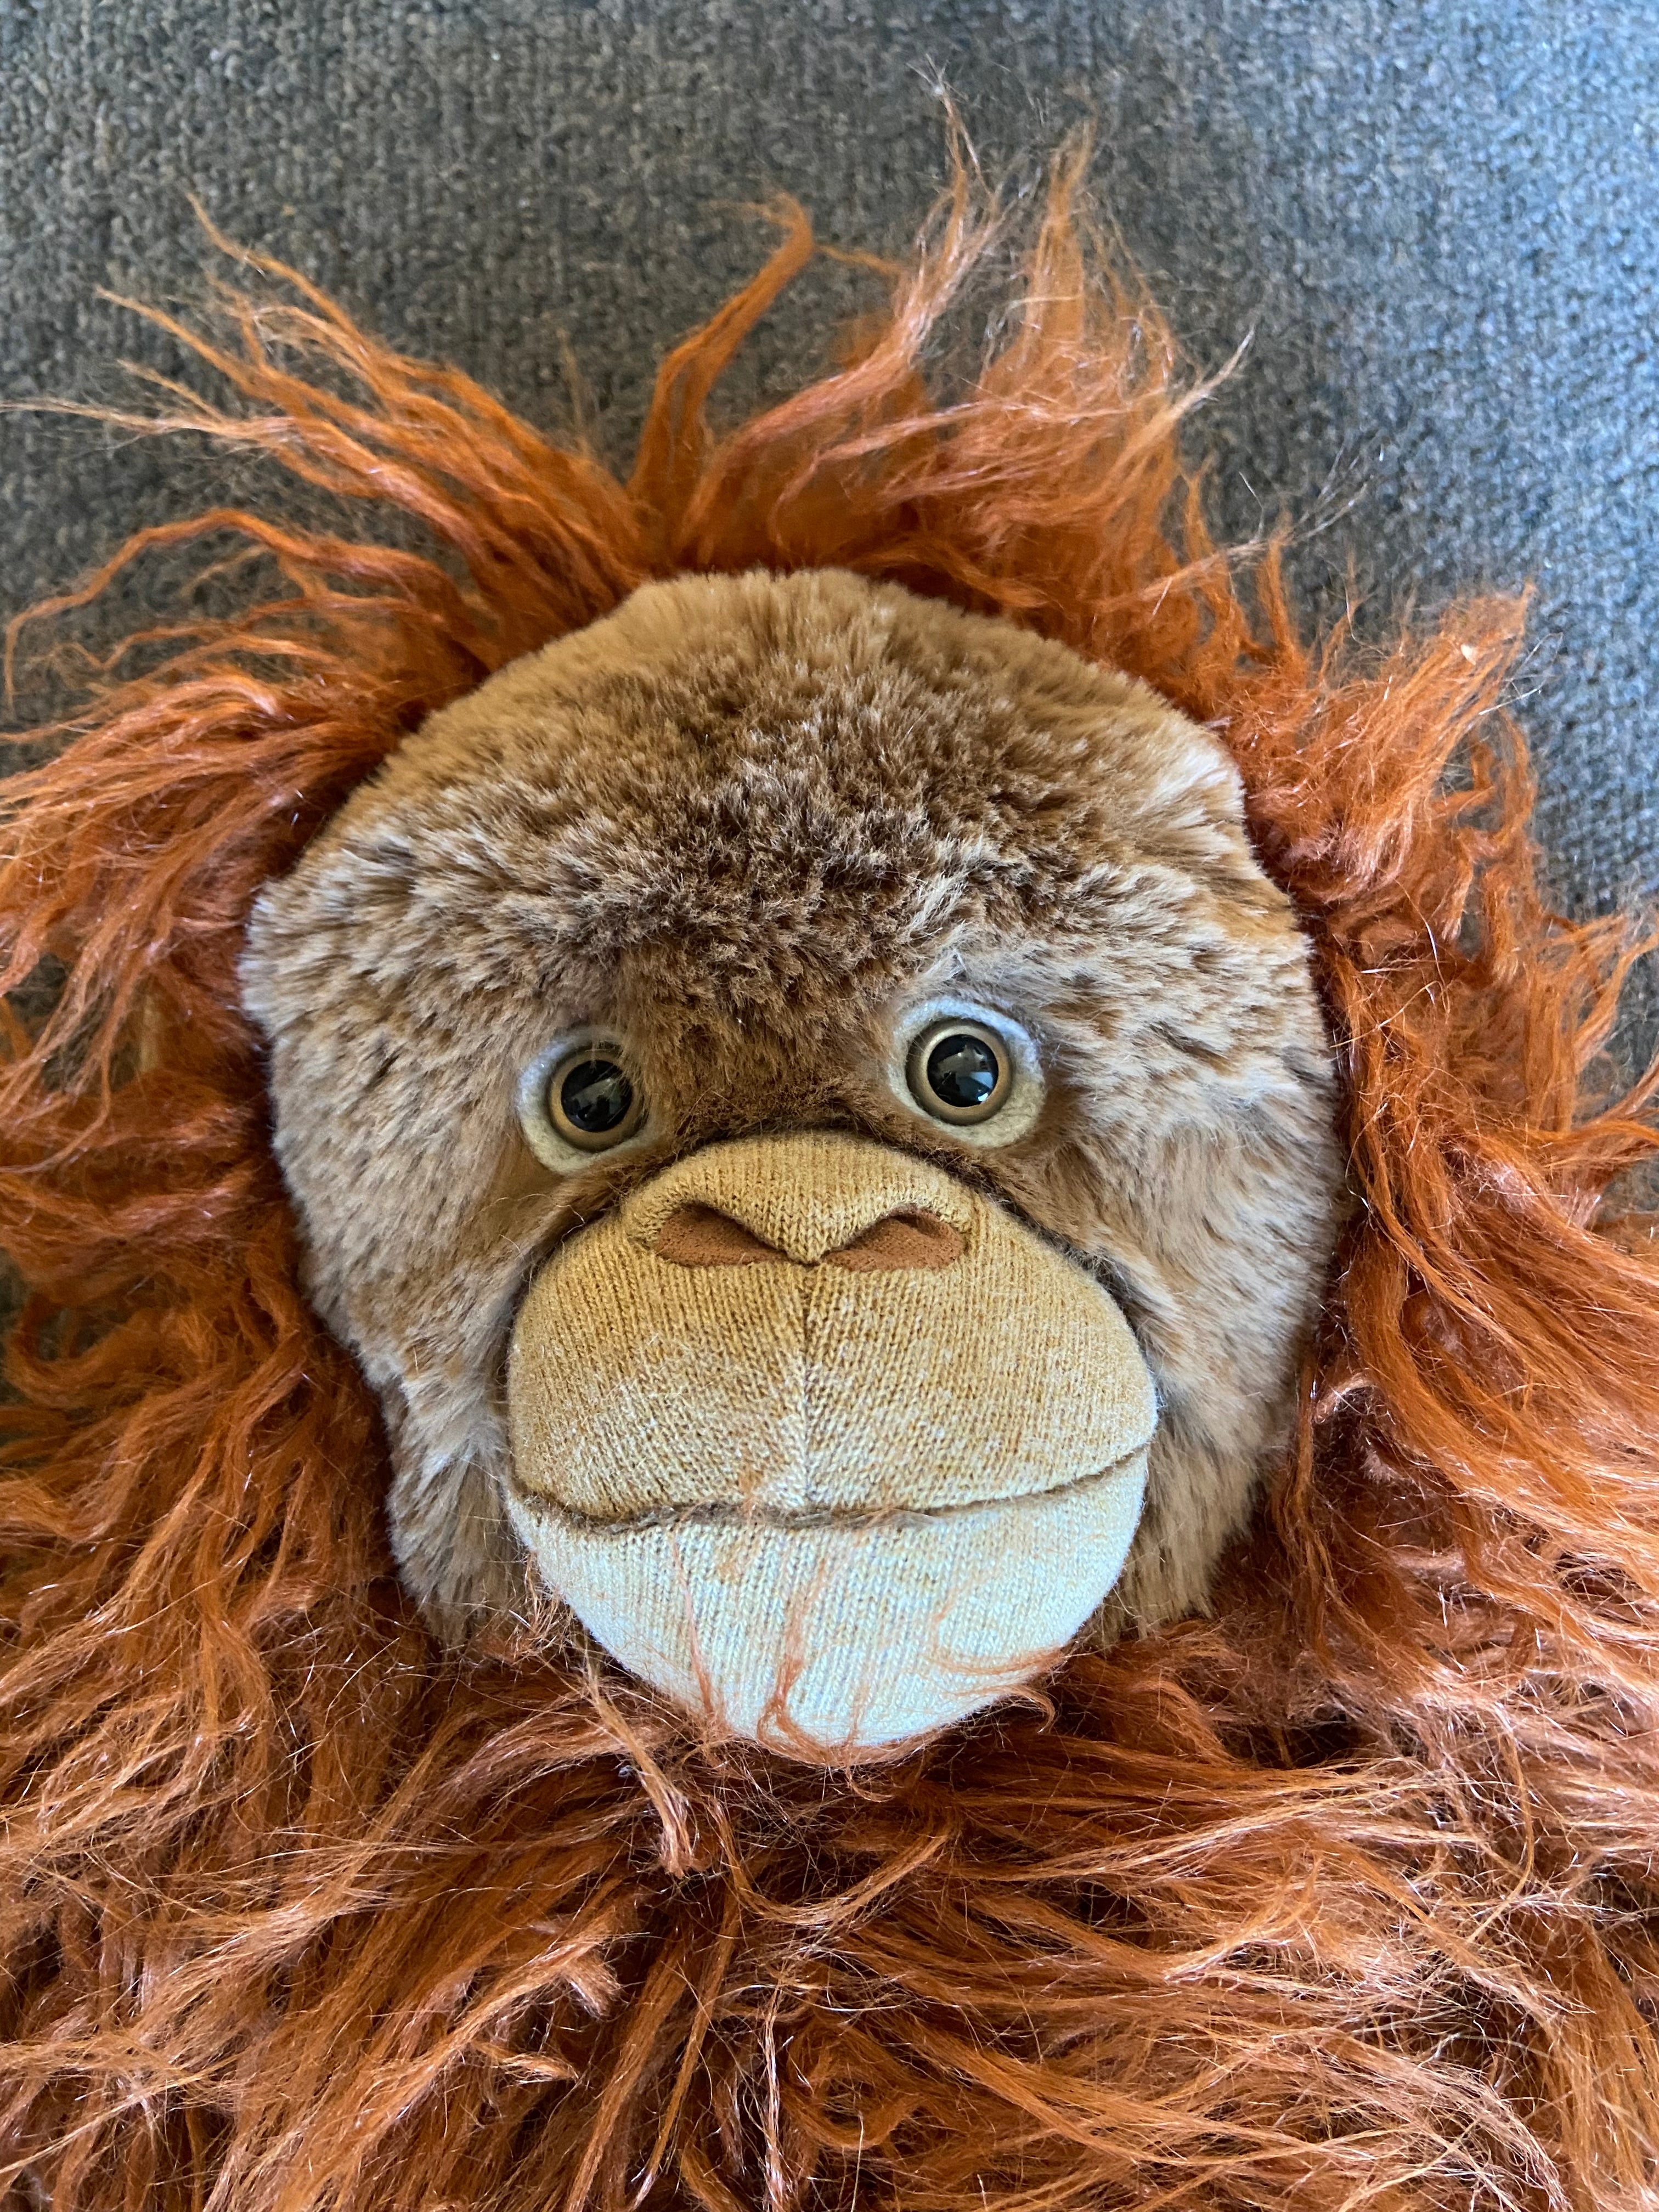 Oscar The Friendly Orangutan